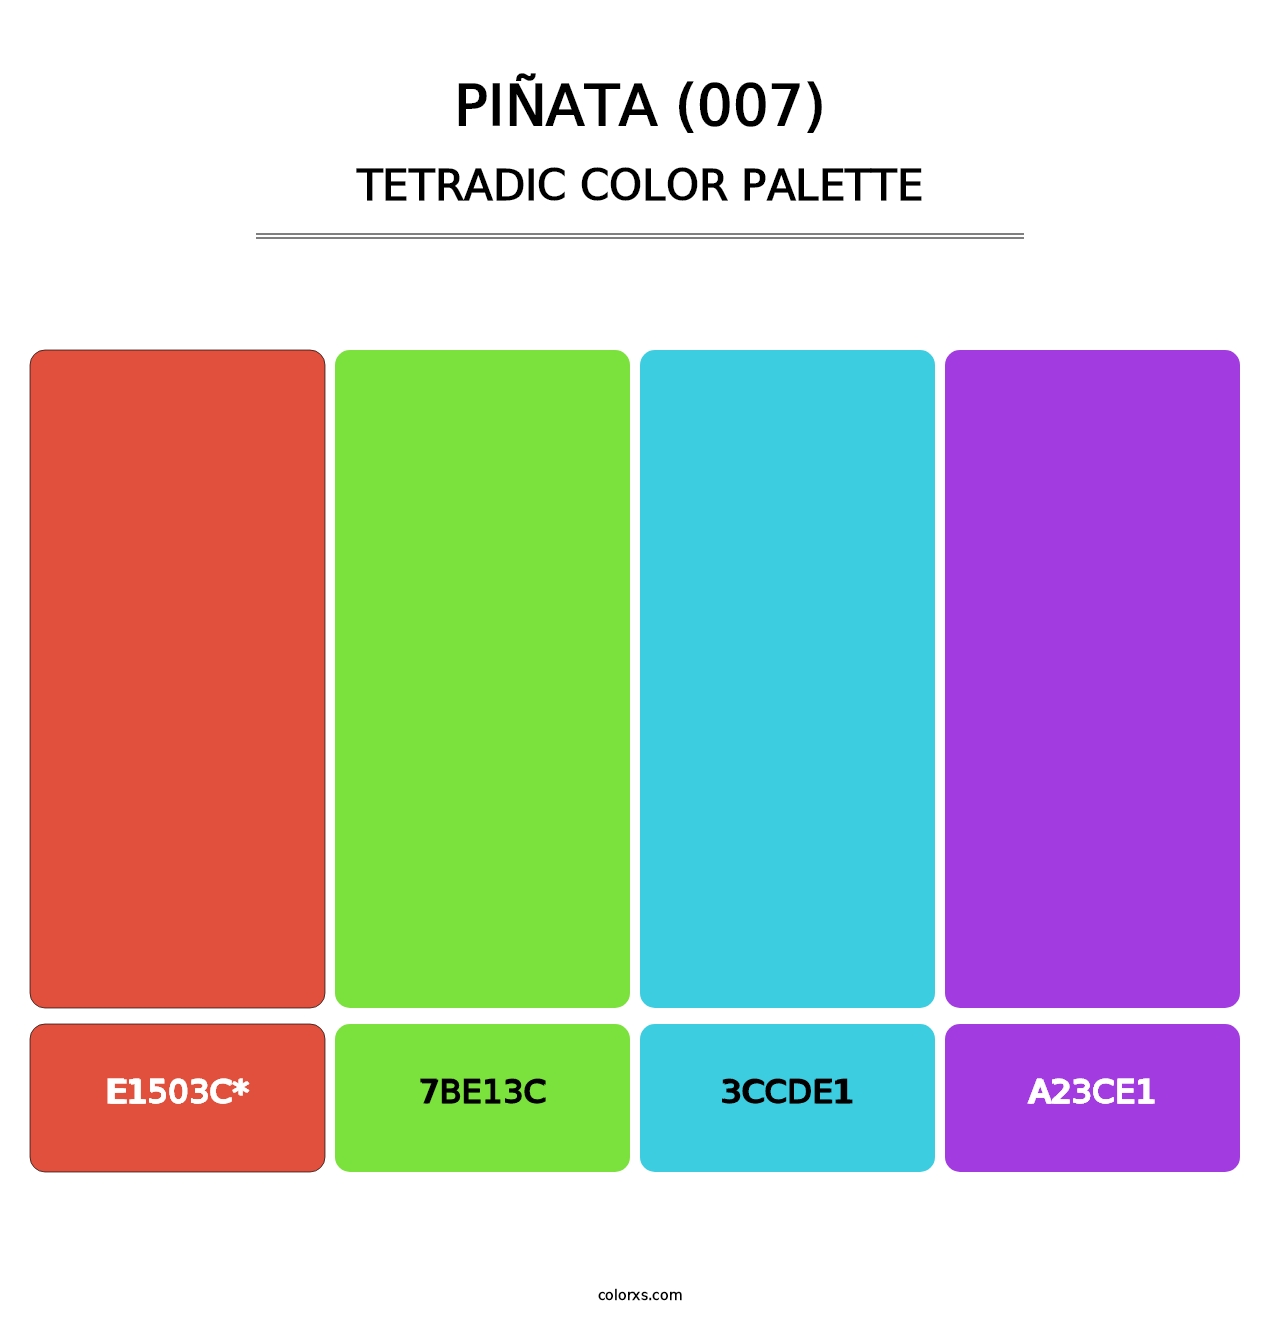 Piñata (007) - Tetradic Color Palette